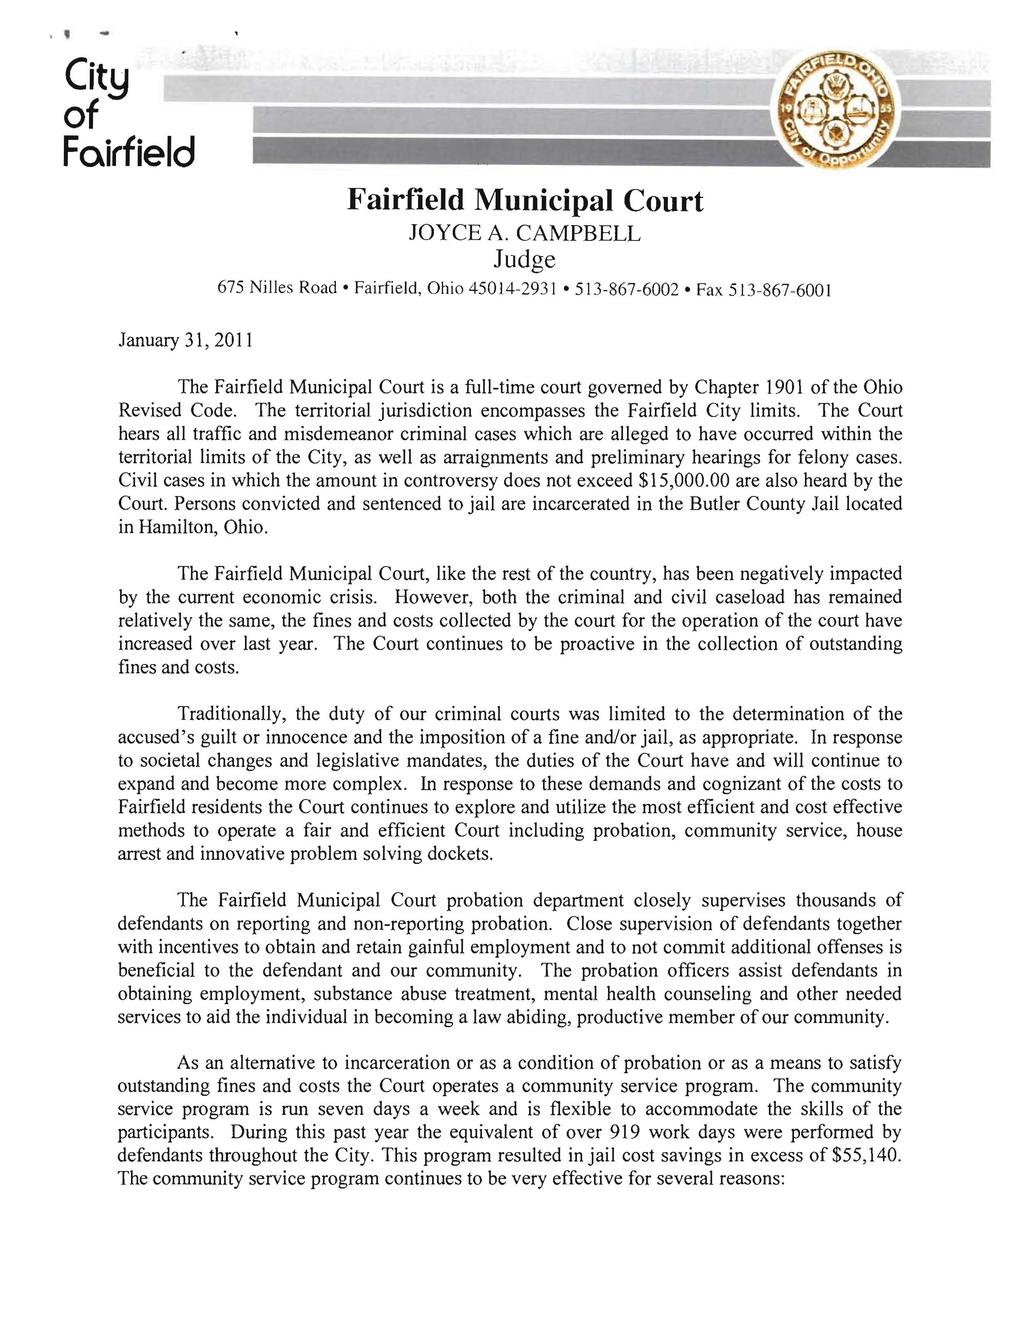 City of Fairfield Fairfield Municipal Court JOYCE A.